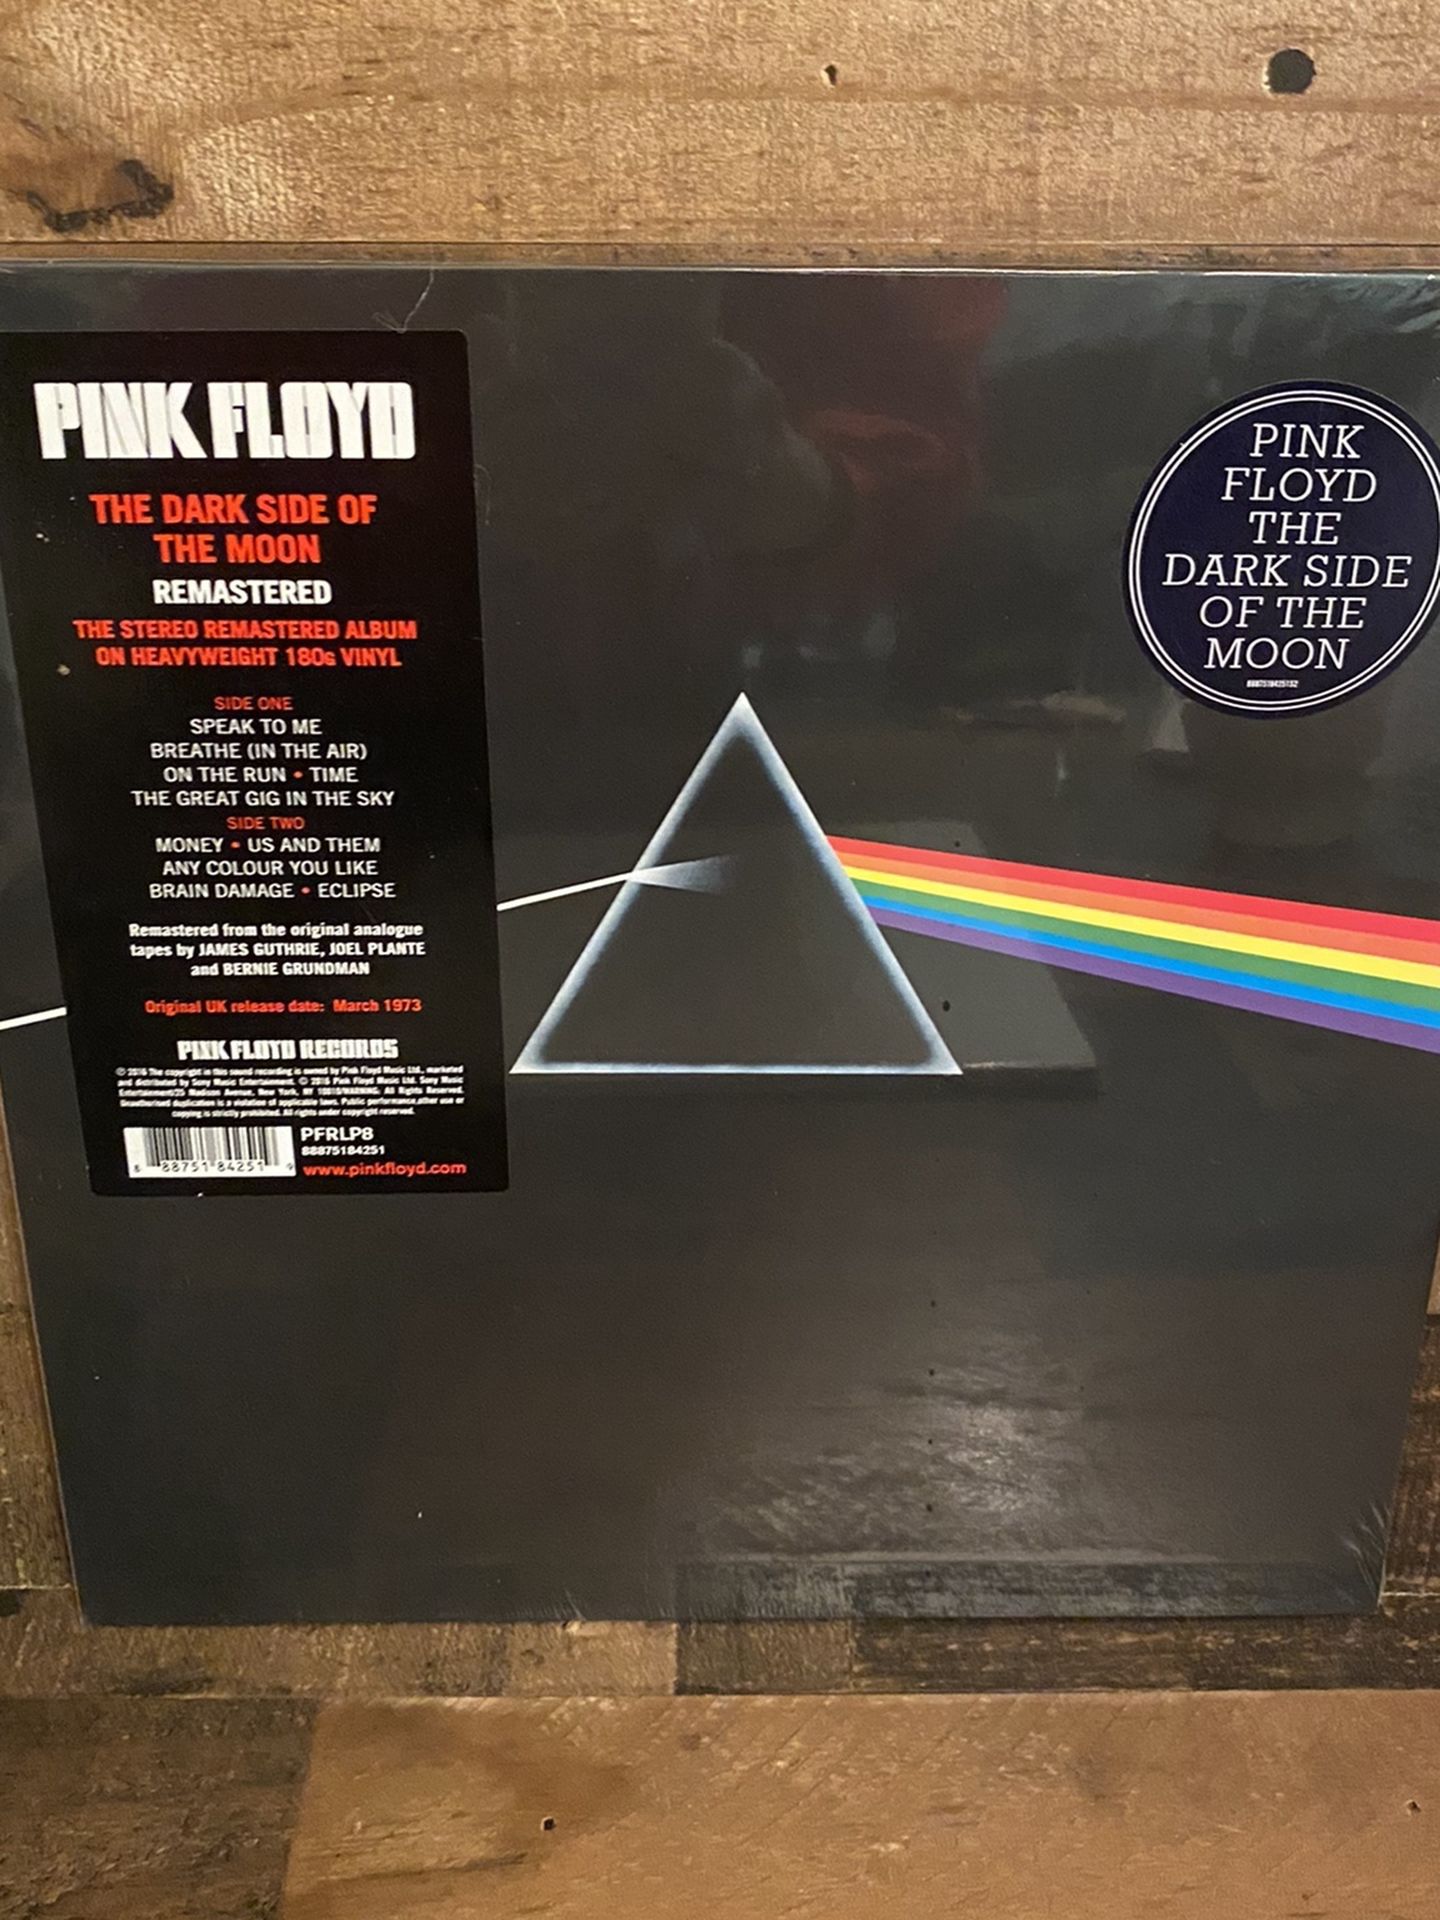 LP PINK FLOYD Dark Side of the Moon 180g Vinyl 2016 REMASTERED NEW MINT SEALED